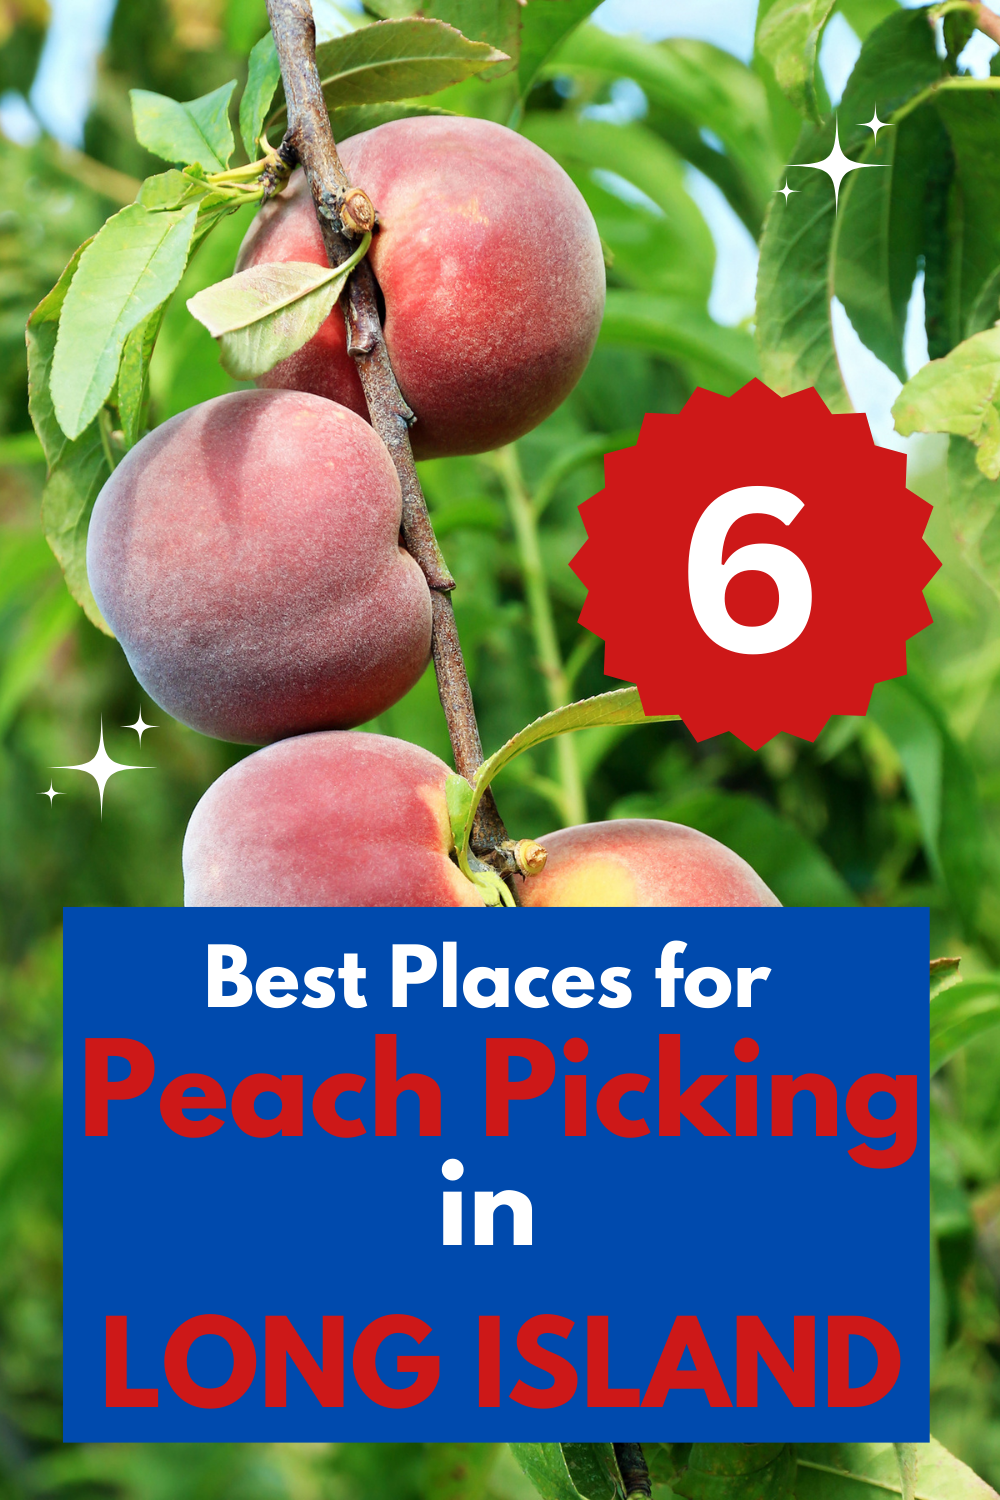 pyo peaches long island